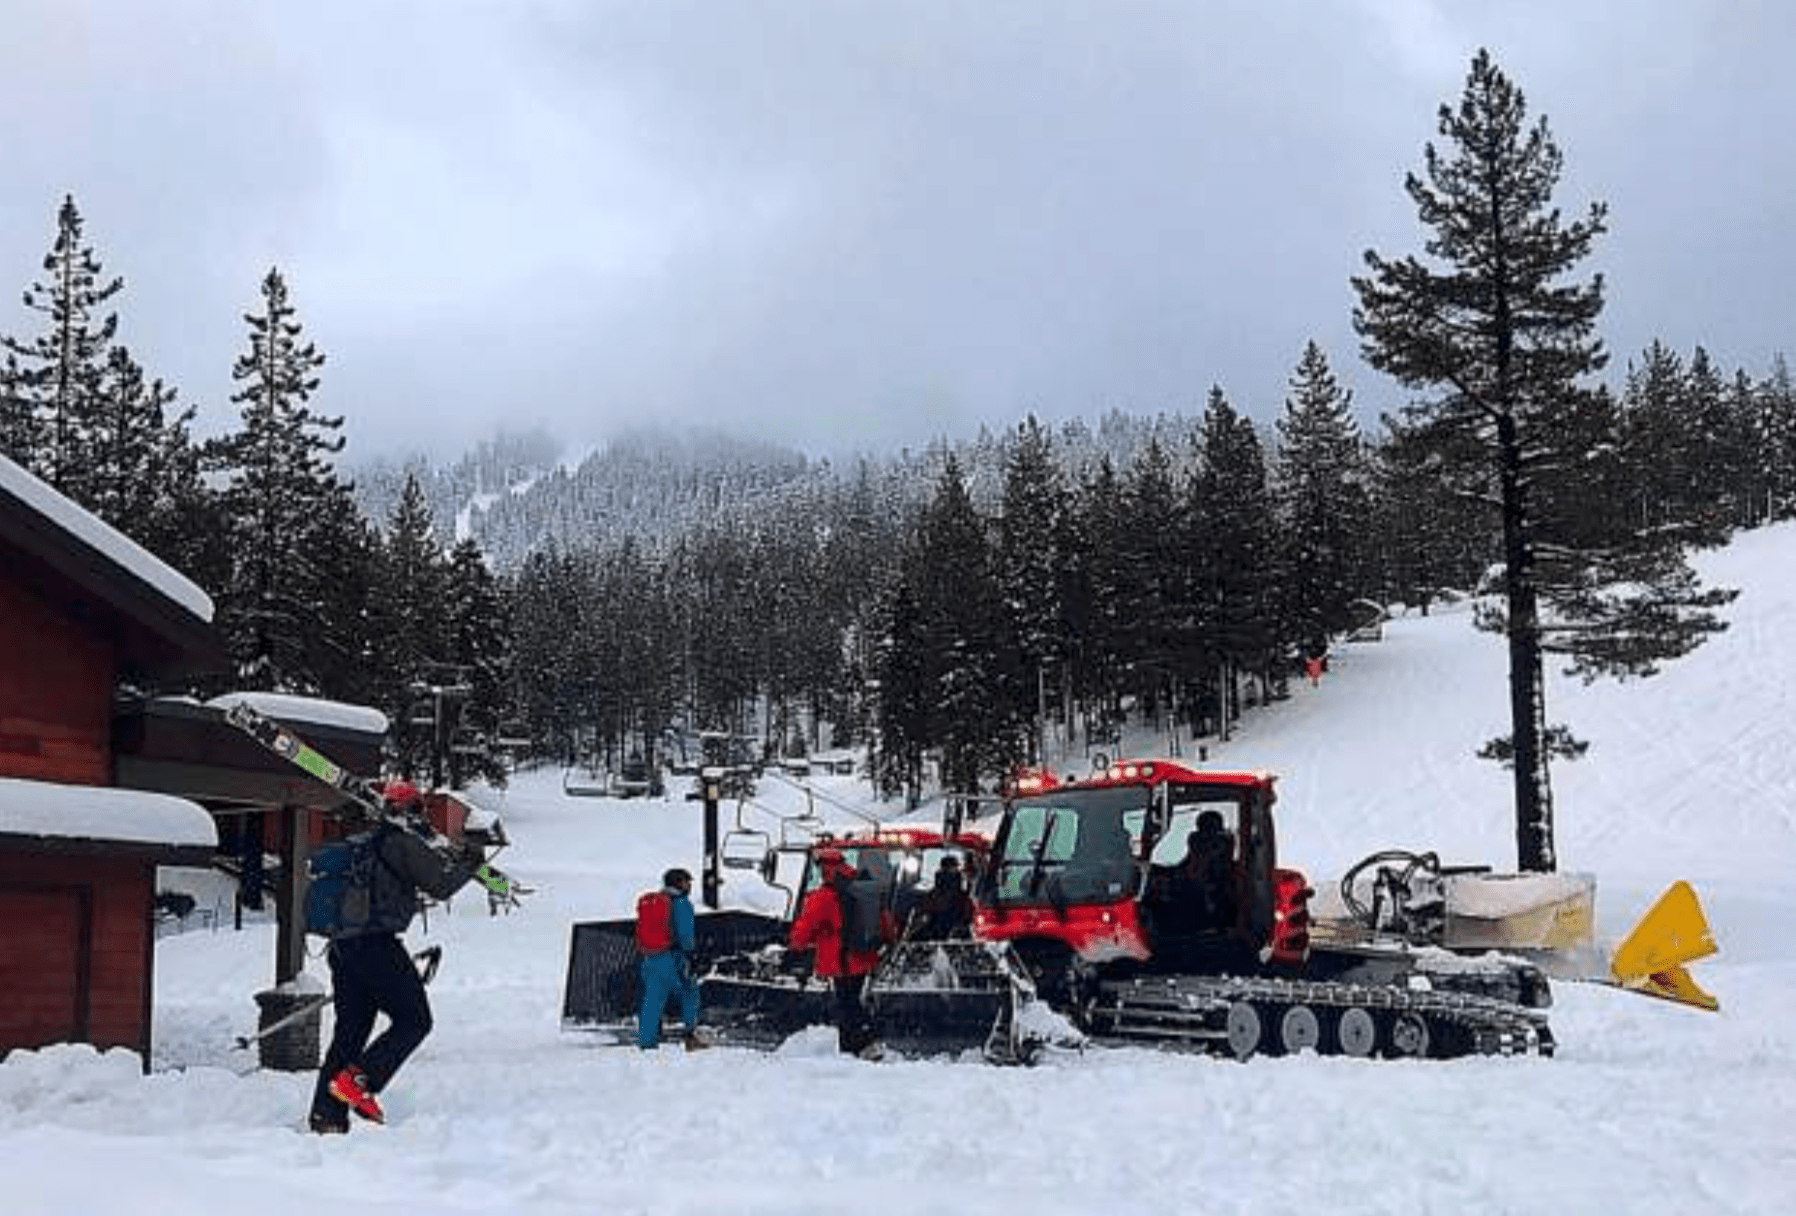 diamond peak, Nevada, lost skier, rescued